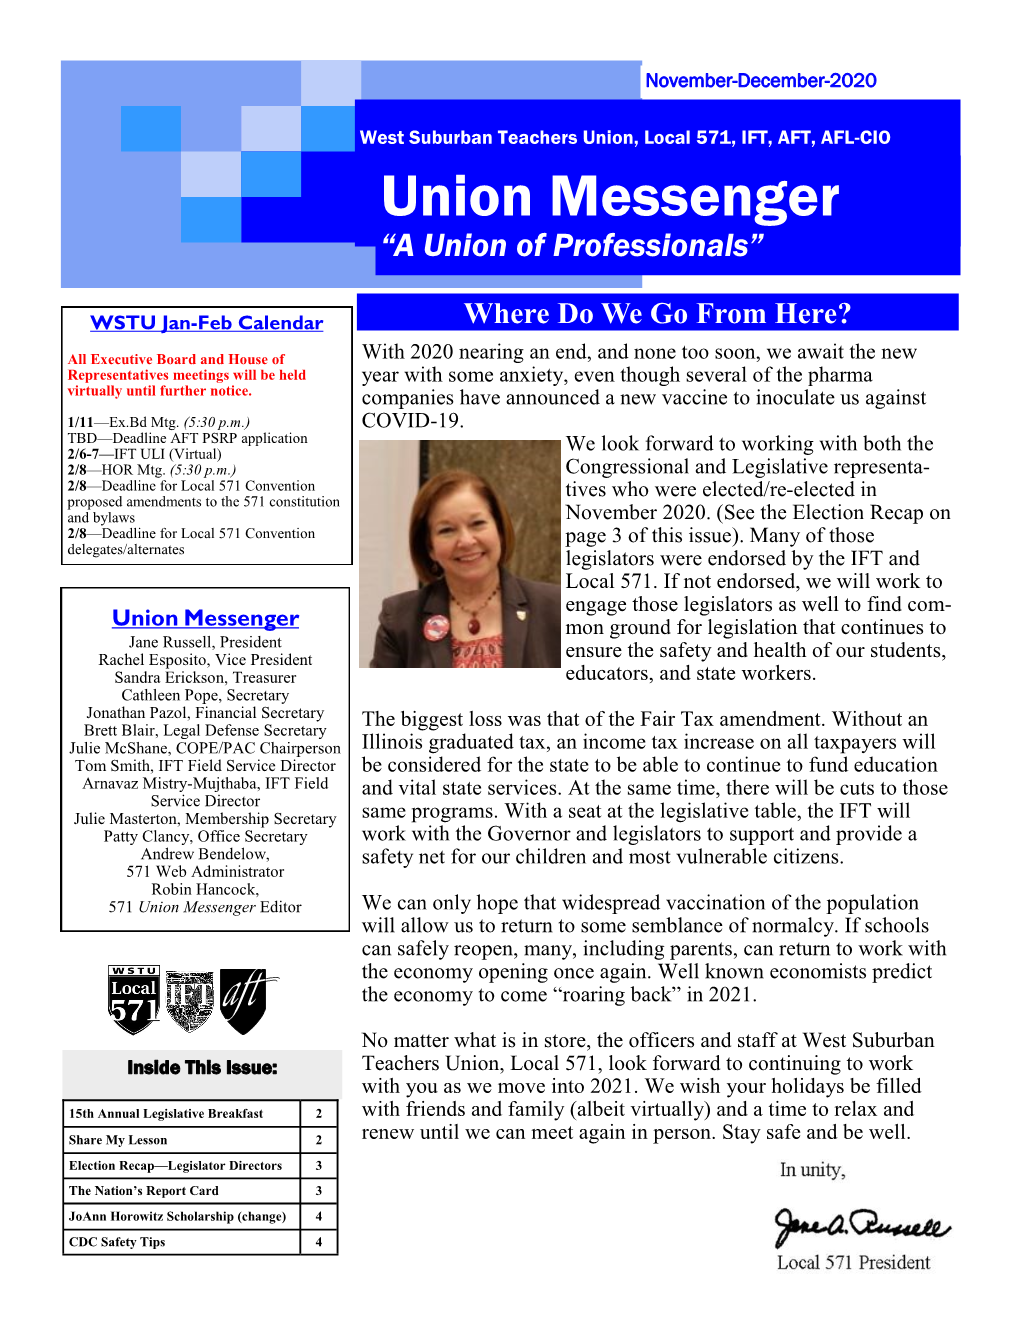 Union Messenger “A Union of Professionals”